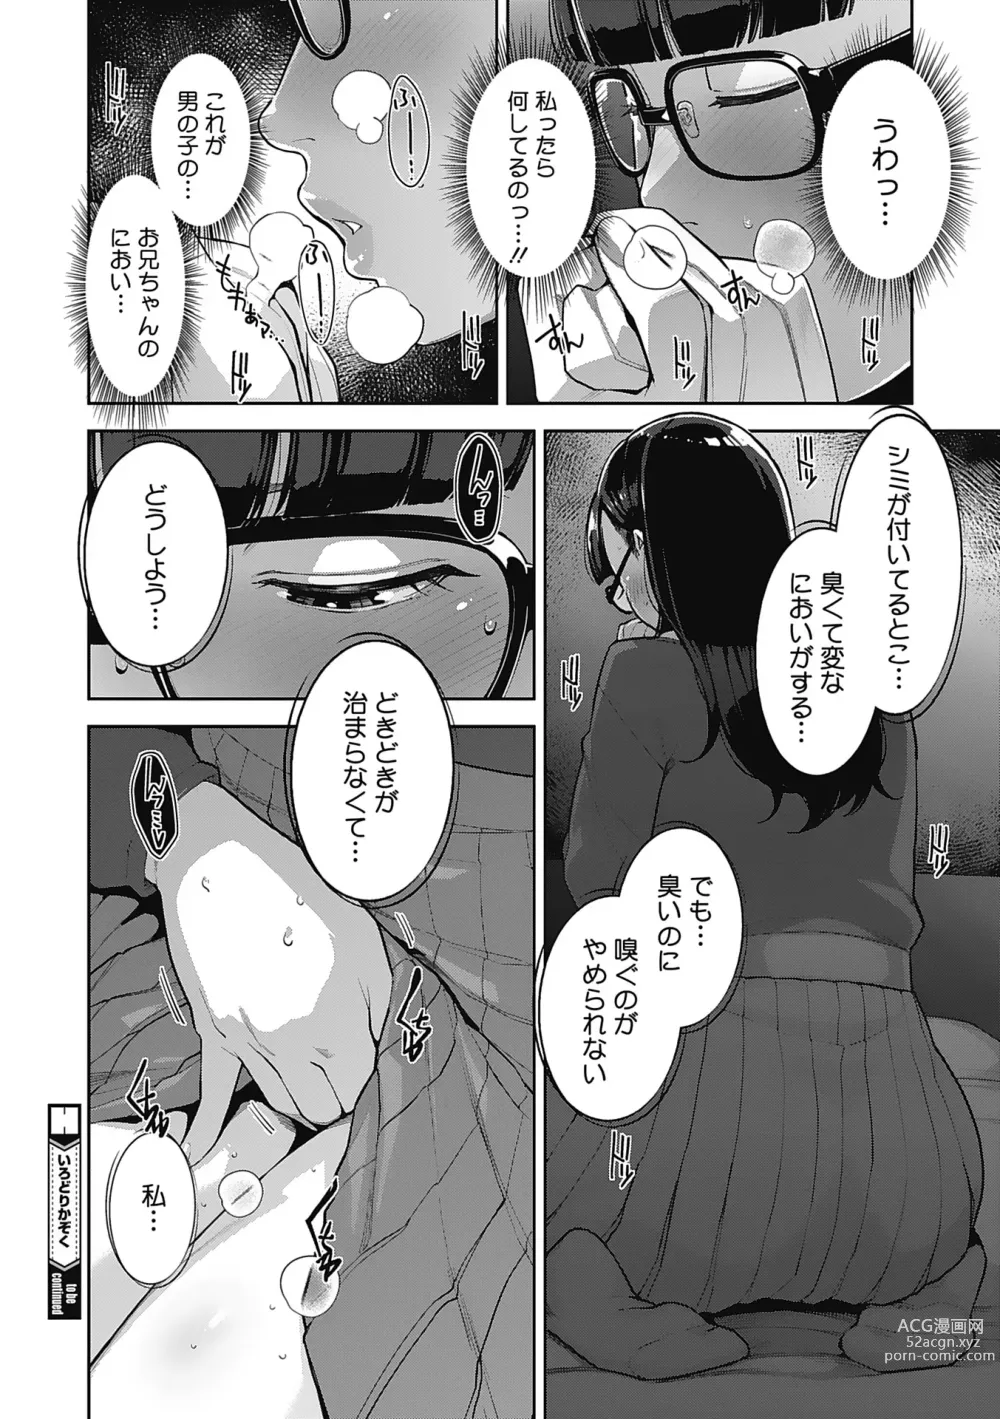 Page 90 of manga Hatsujou Contrast